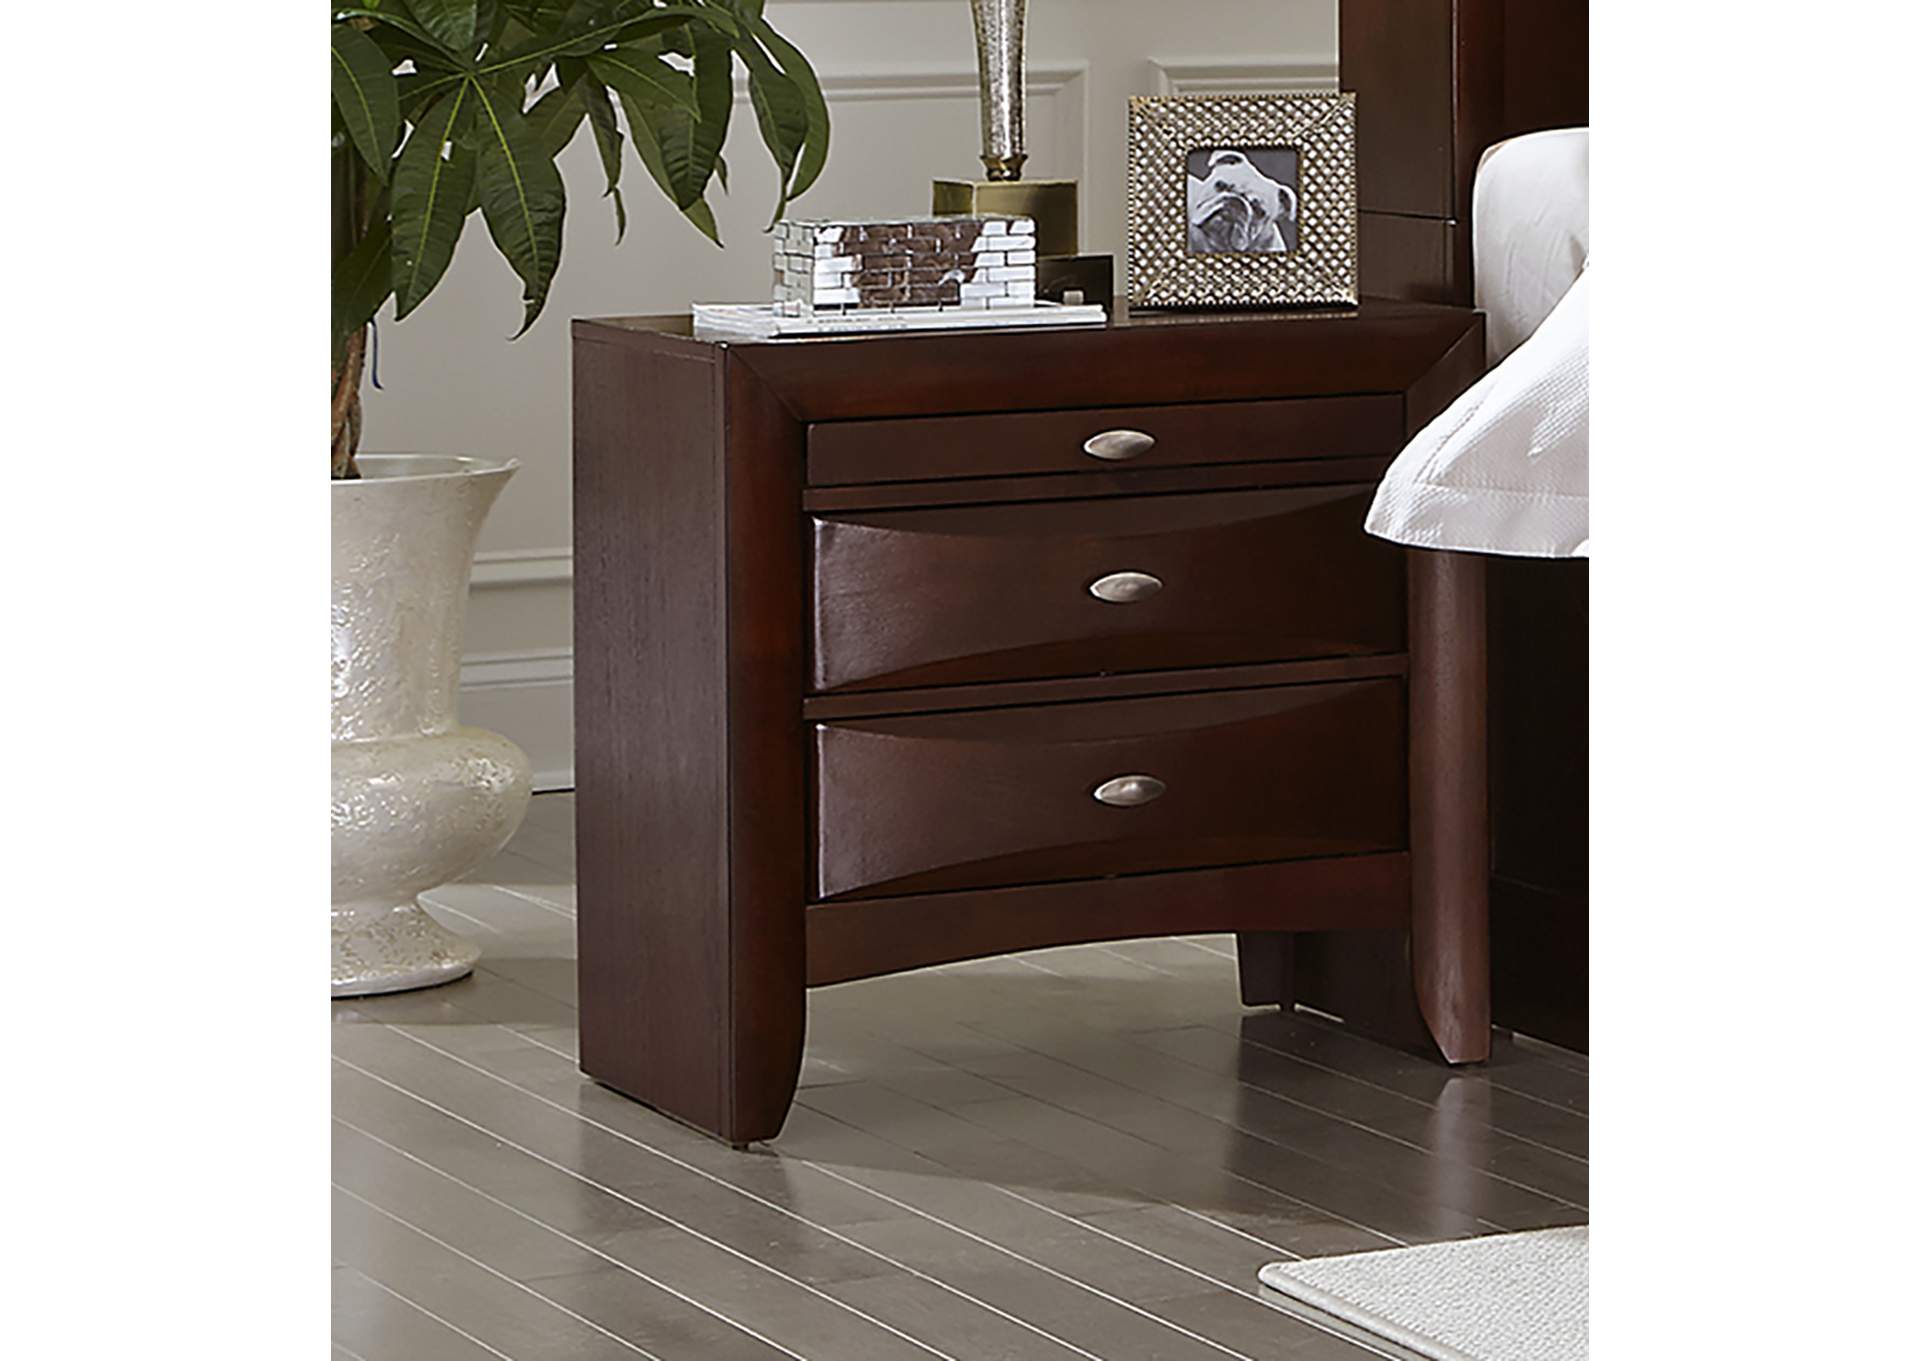 New Merlot Linda Queen Bed,Global Furniture USA